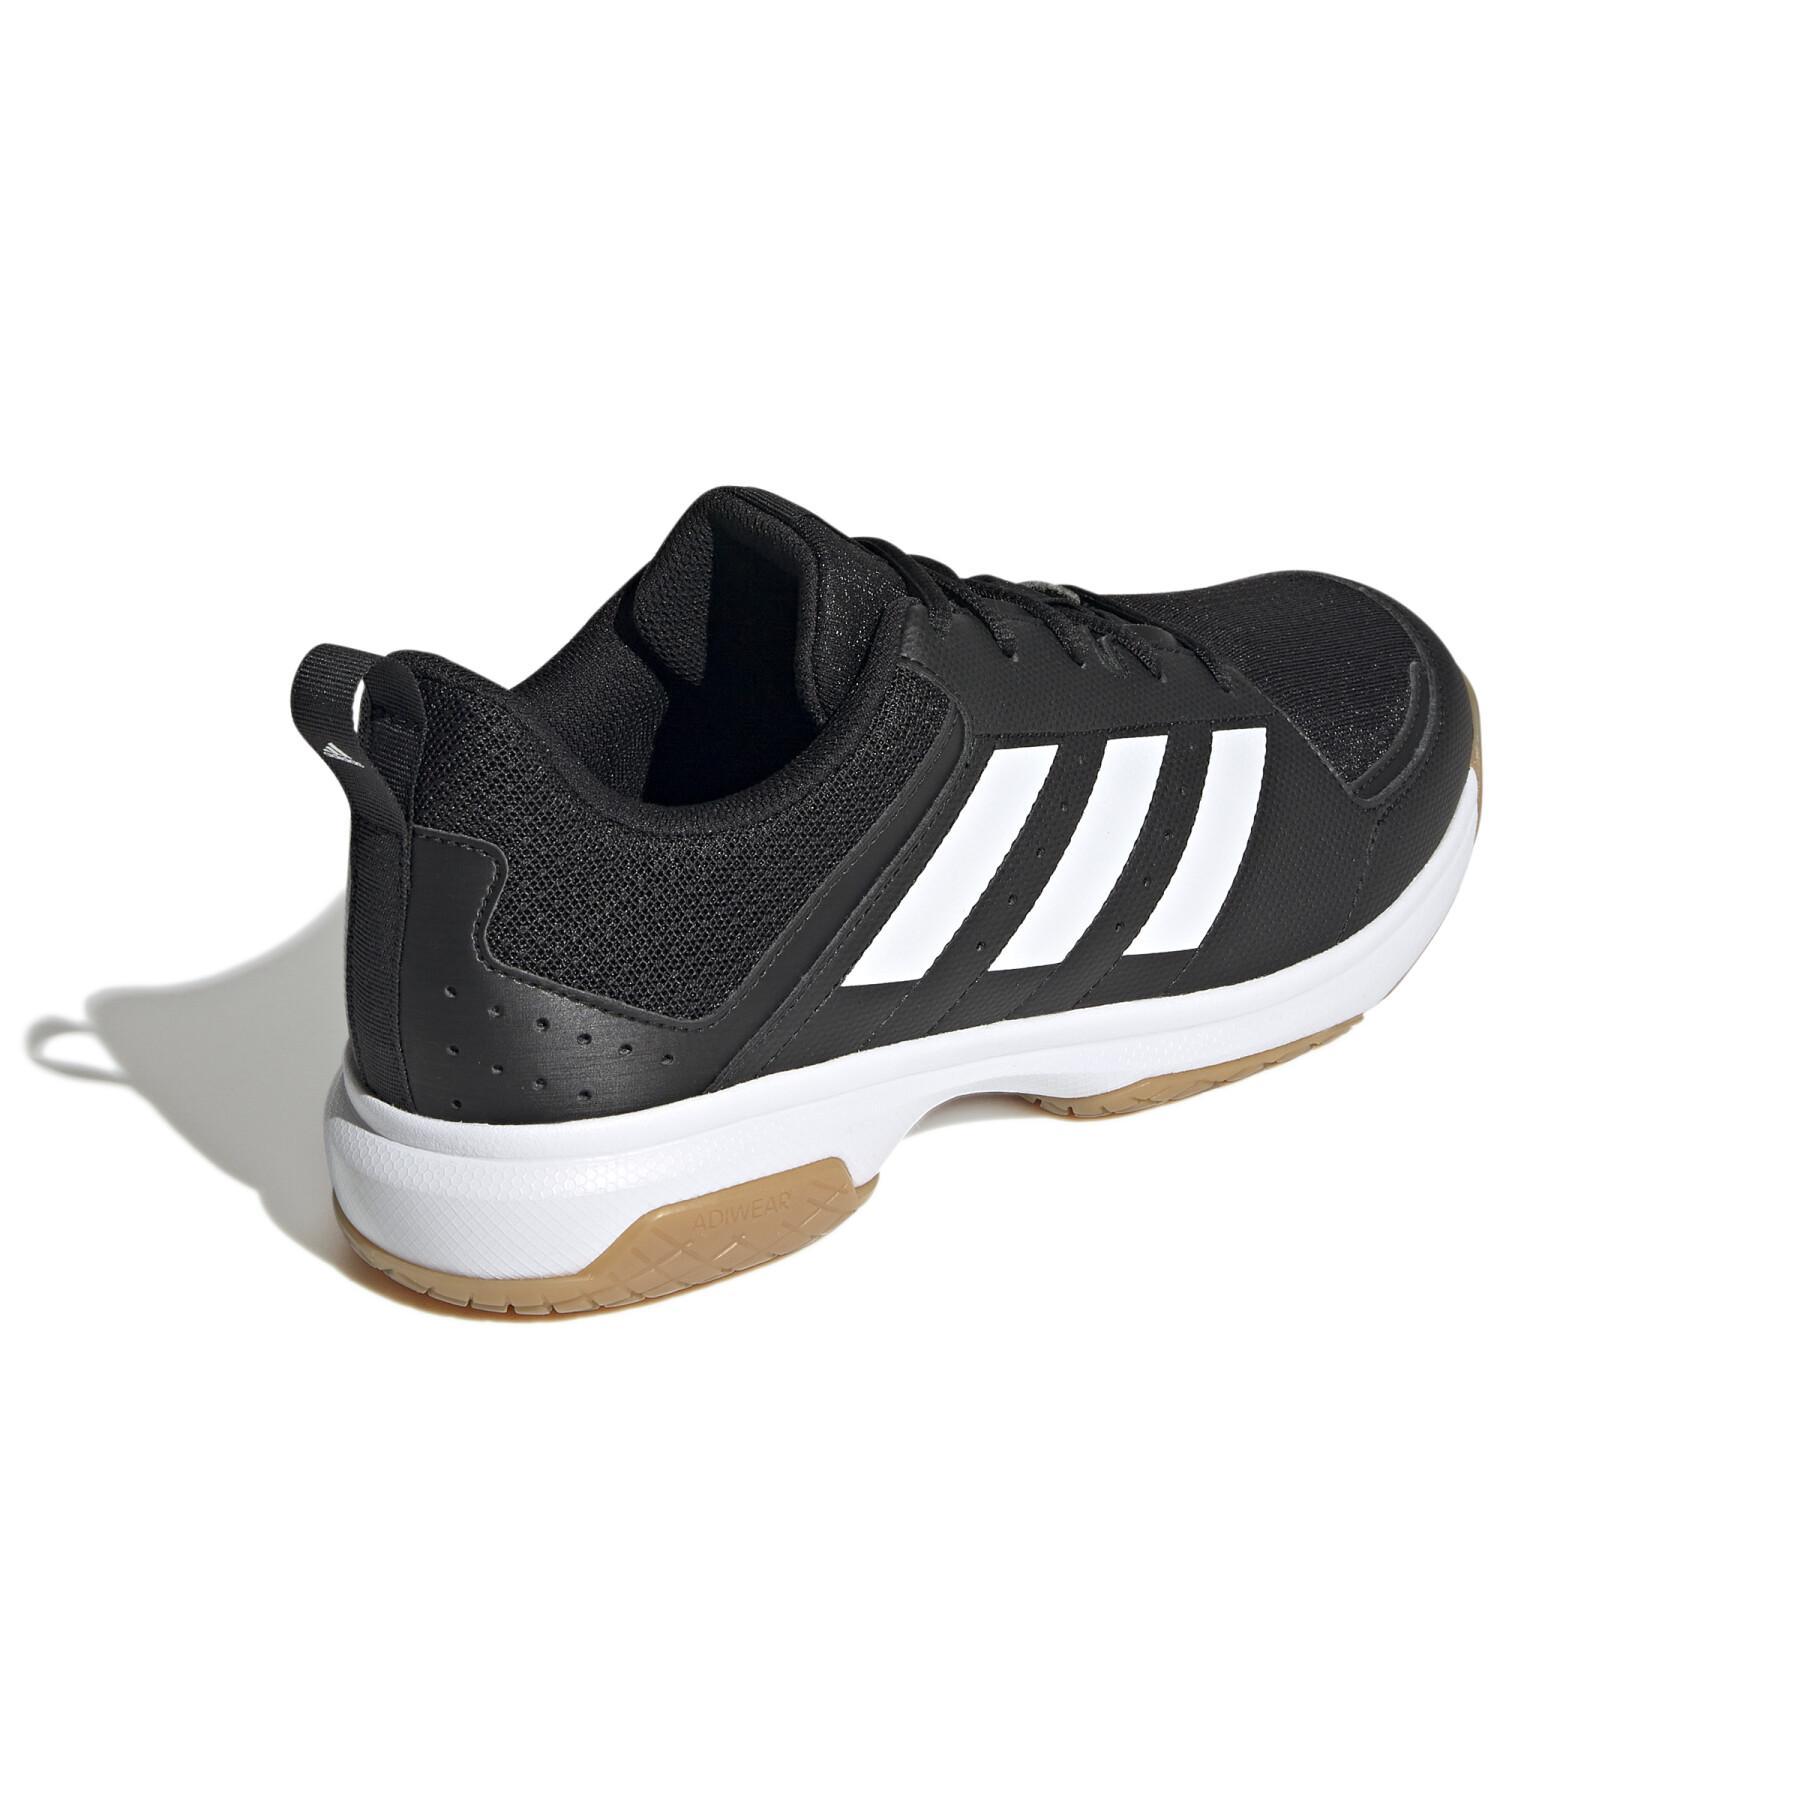 Ligra Shoes Handball adidas 7